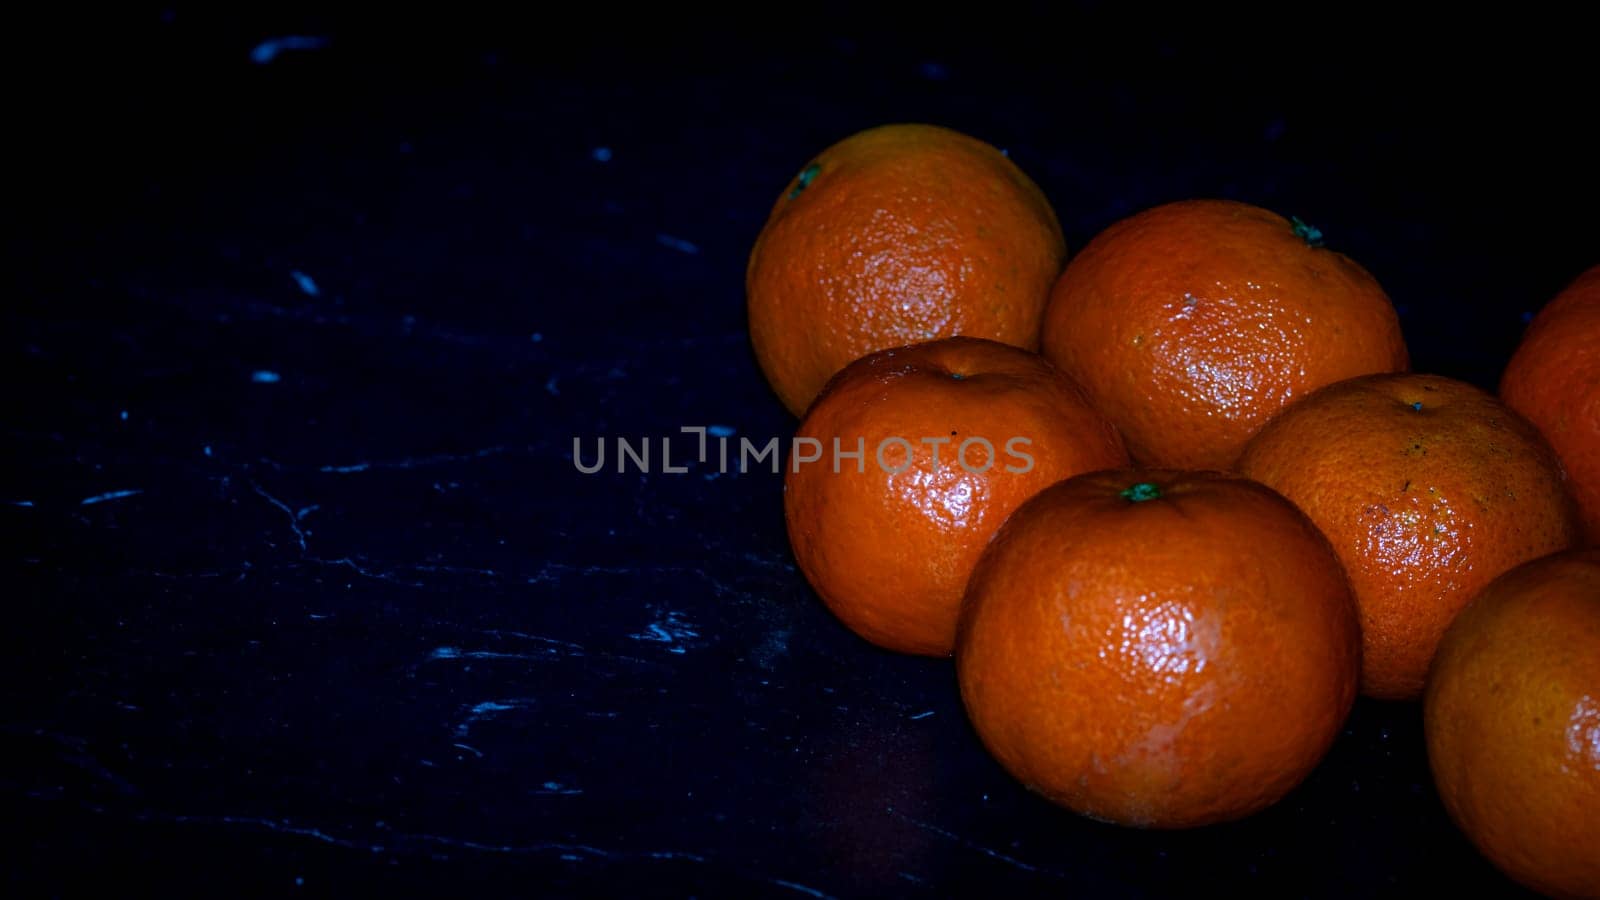 Detail of orange fruit on black background by vladispas